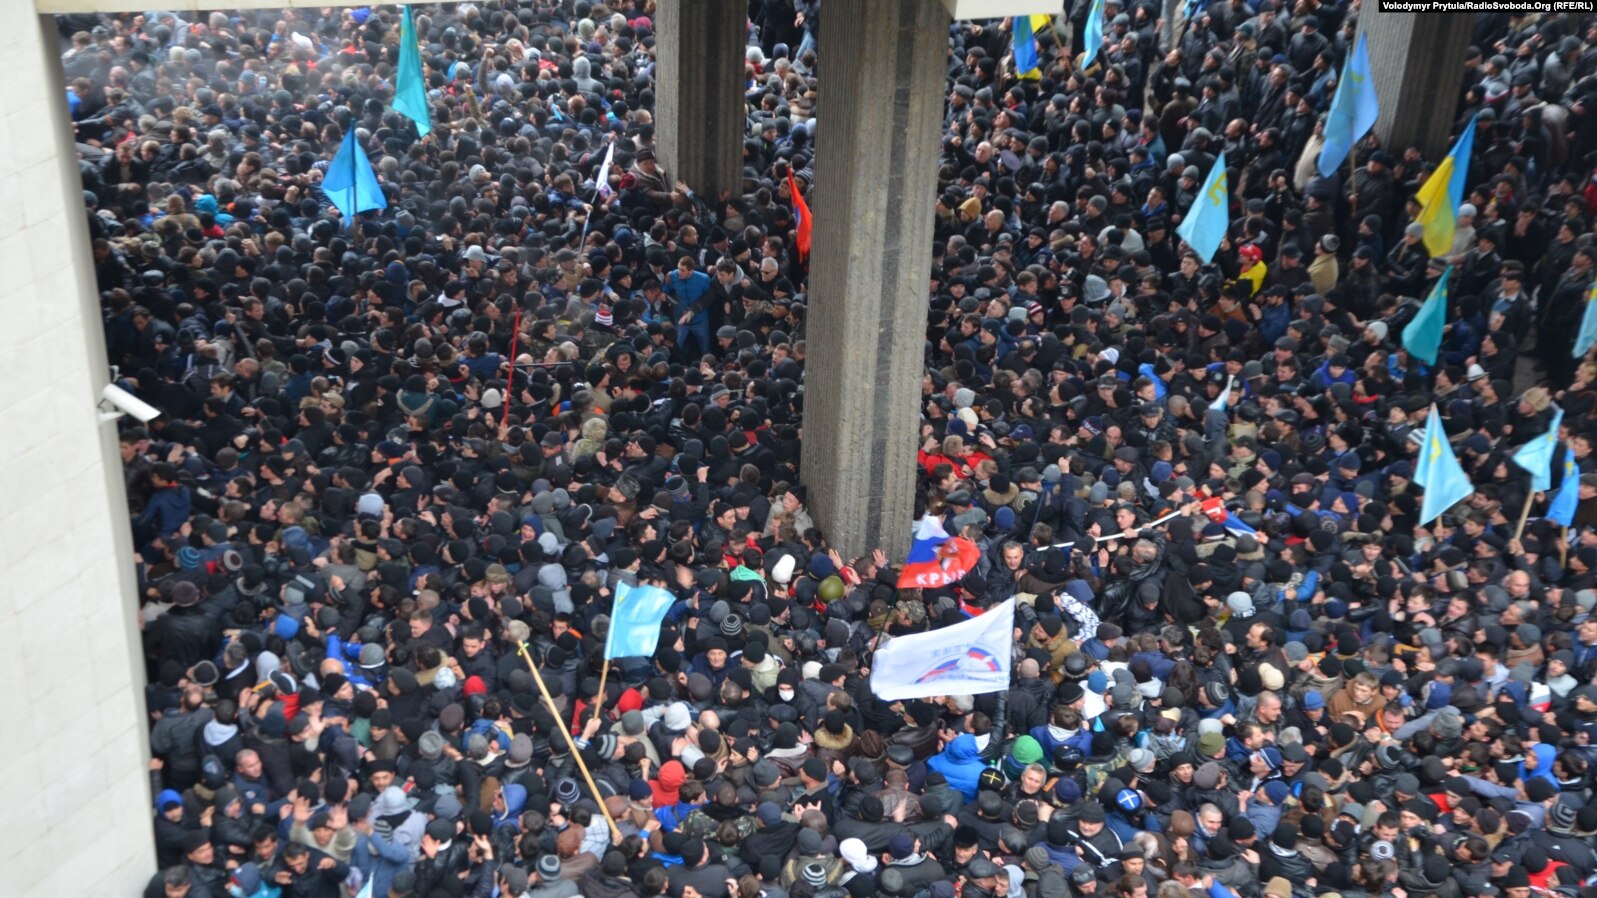 Pro-Ukrainian and pro-Russian activists near the Crimean parliament building, February 26, 2014. Photo by Volodymyr Prytula, RFE/RL.